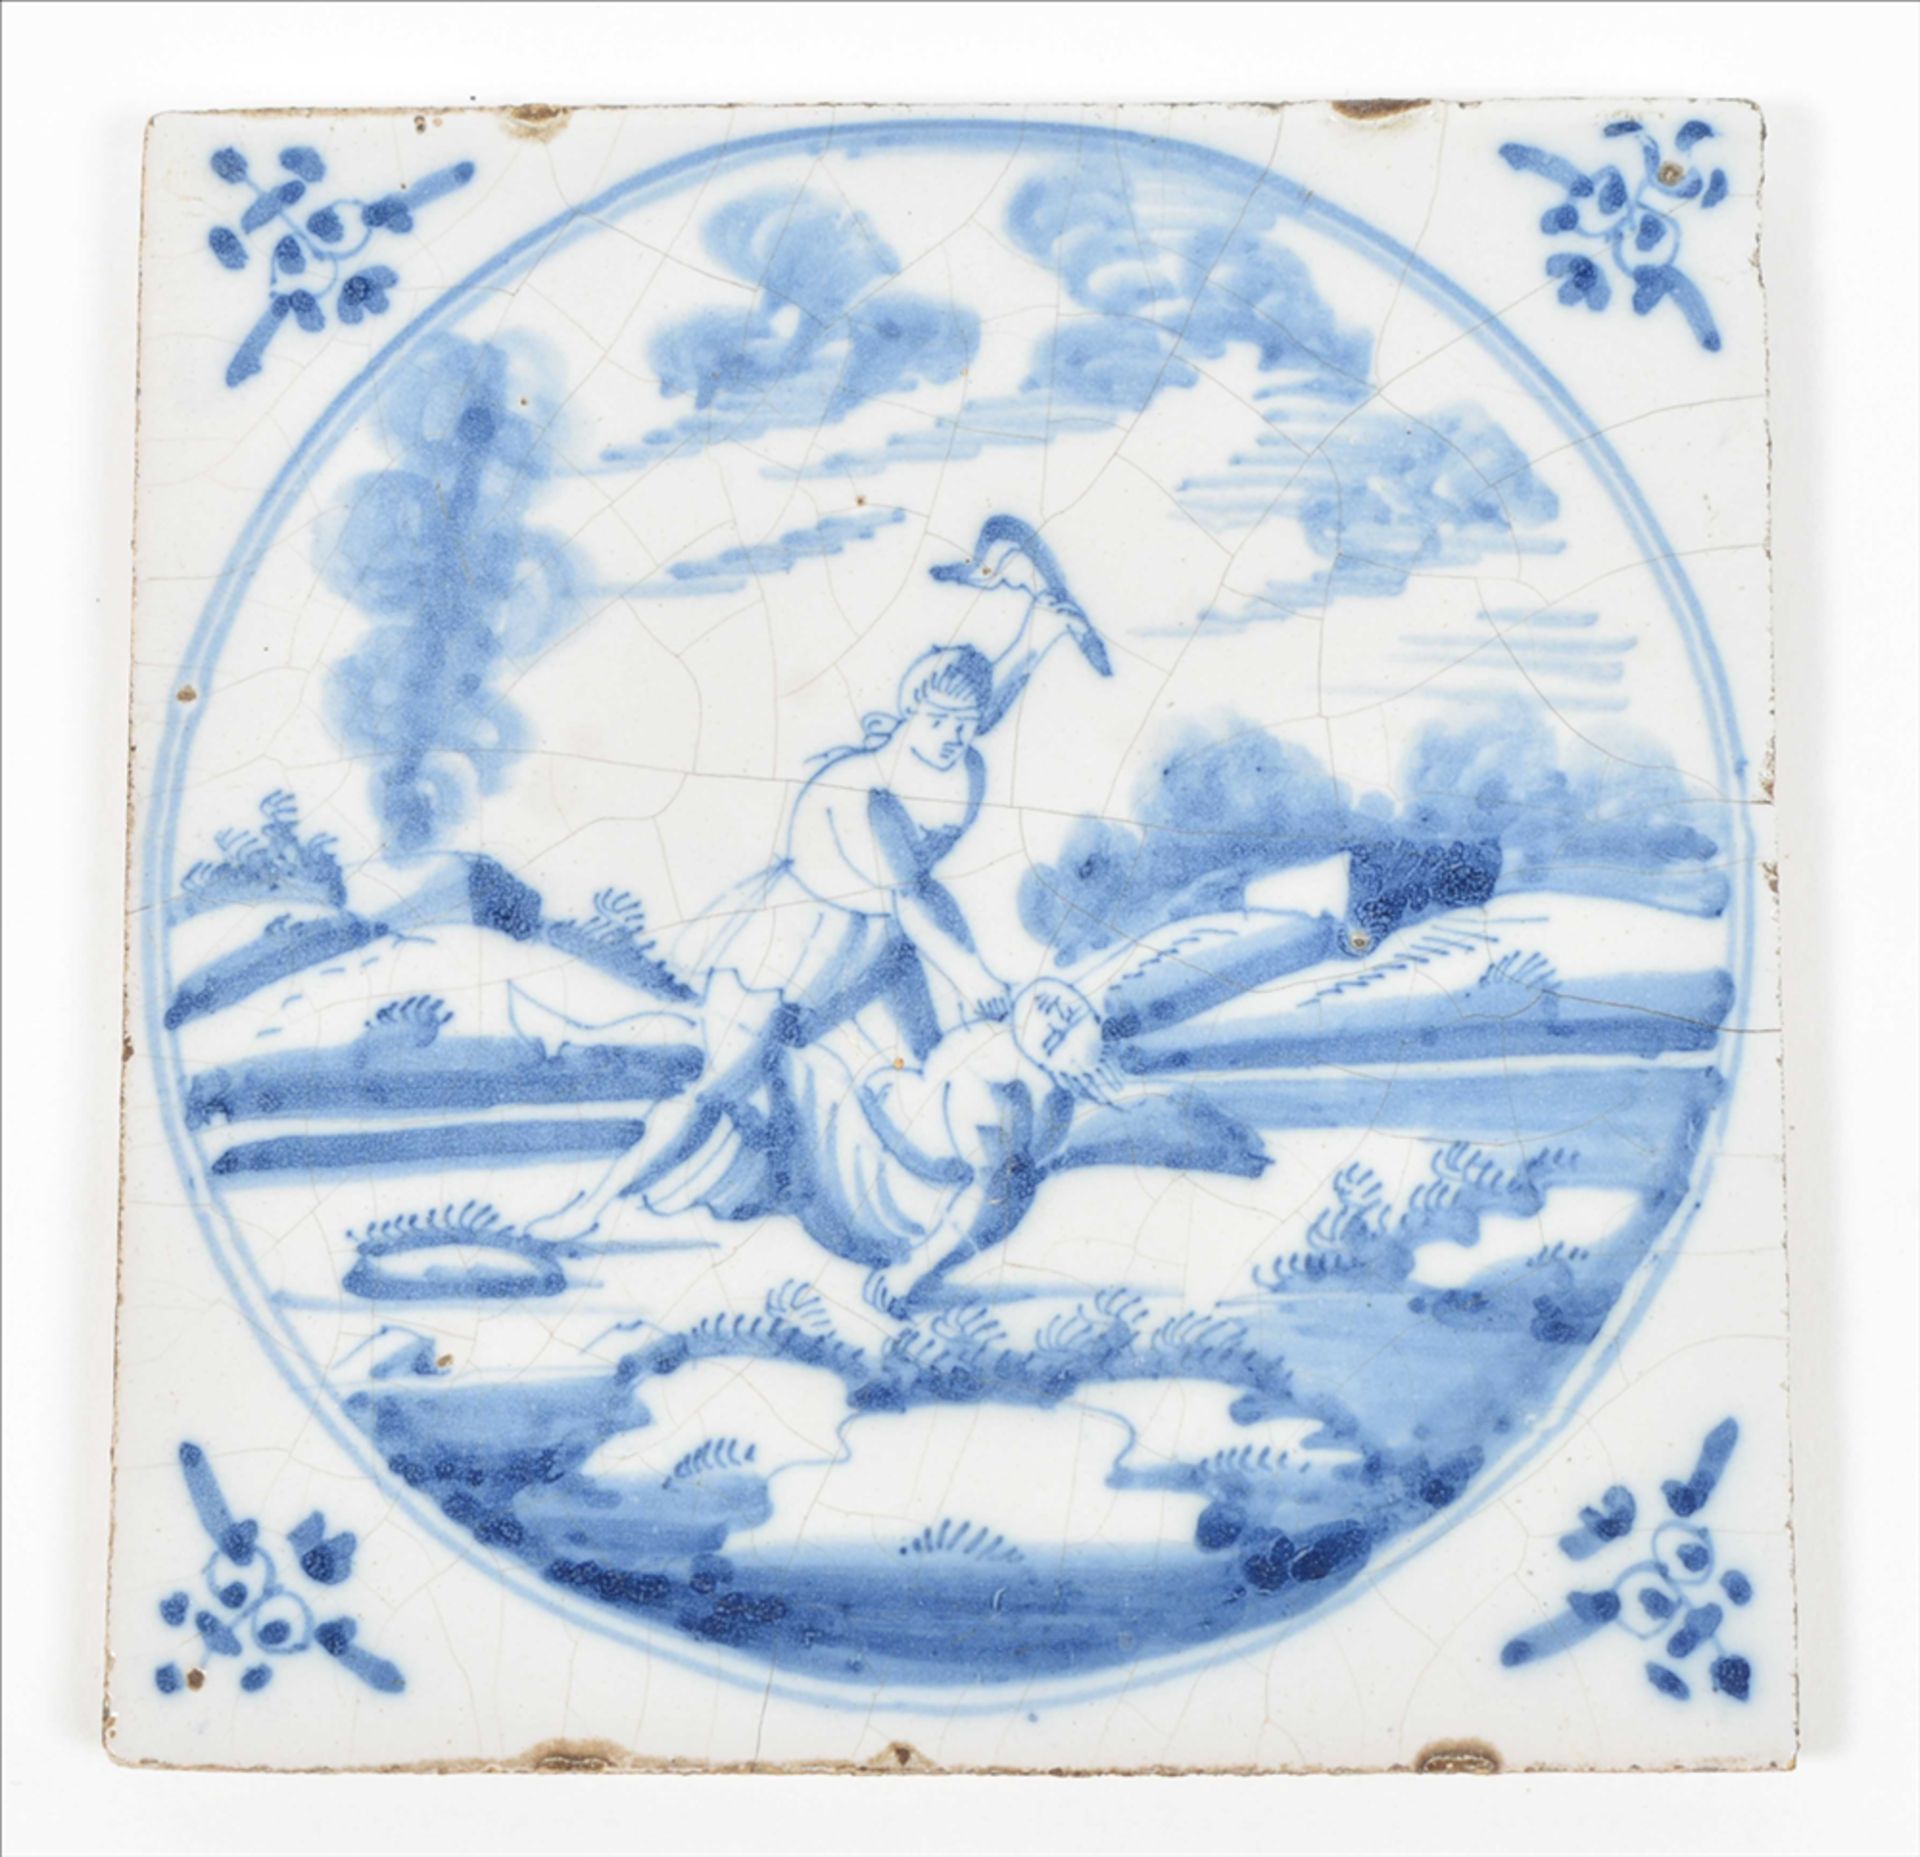 Nine Dutch tiles with biblical scenes - Image 6 of 7